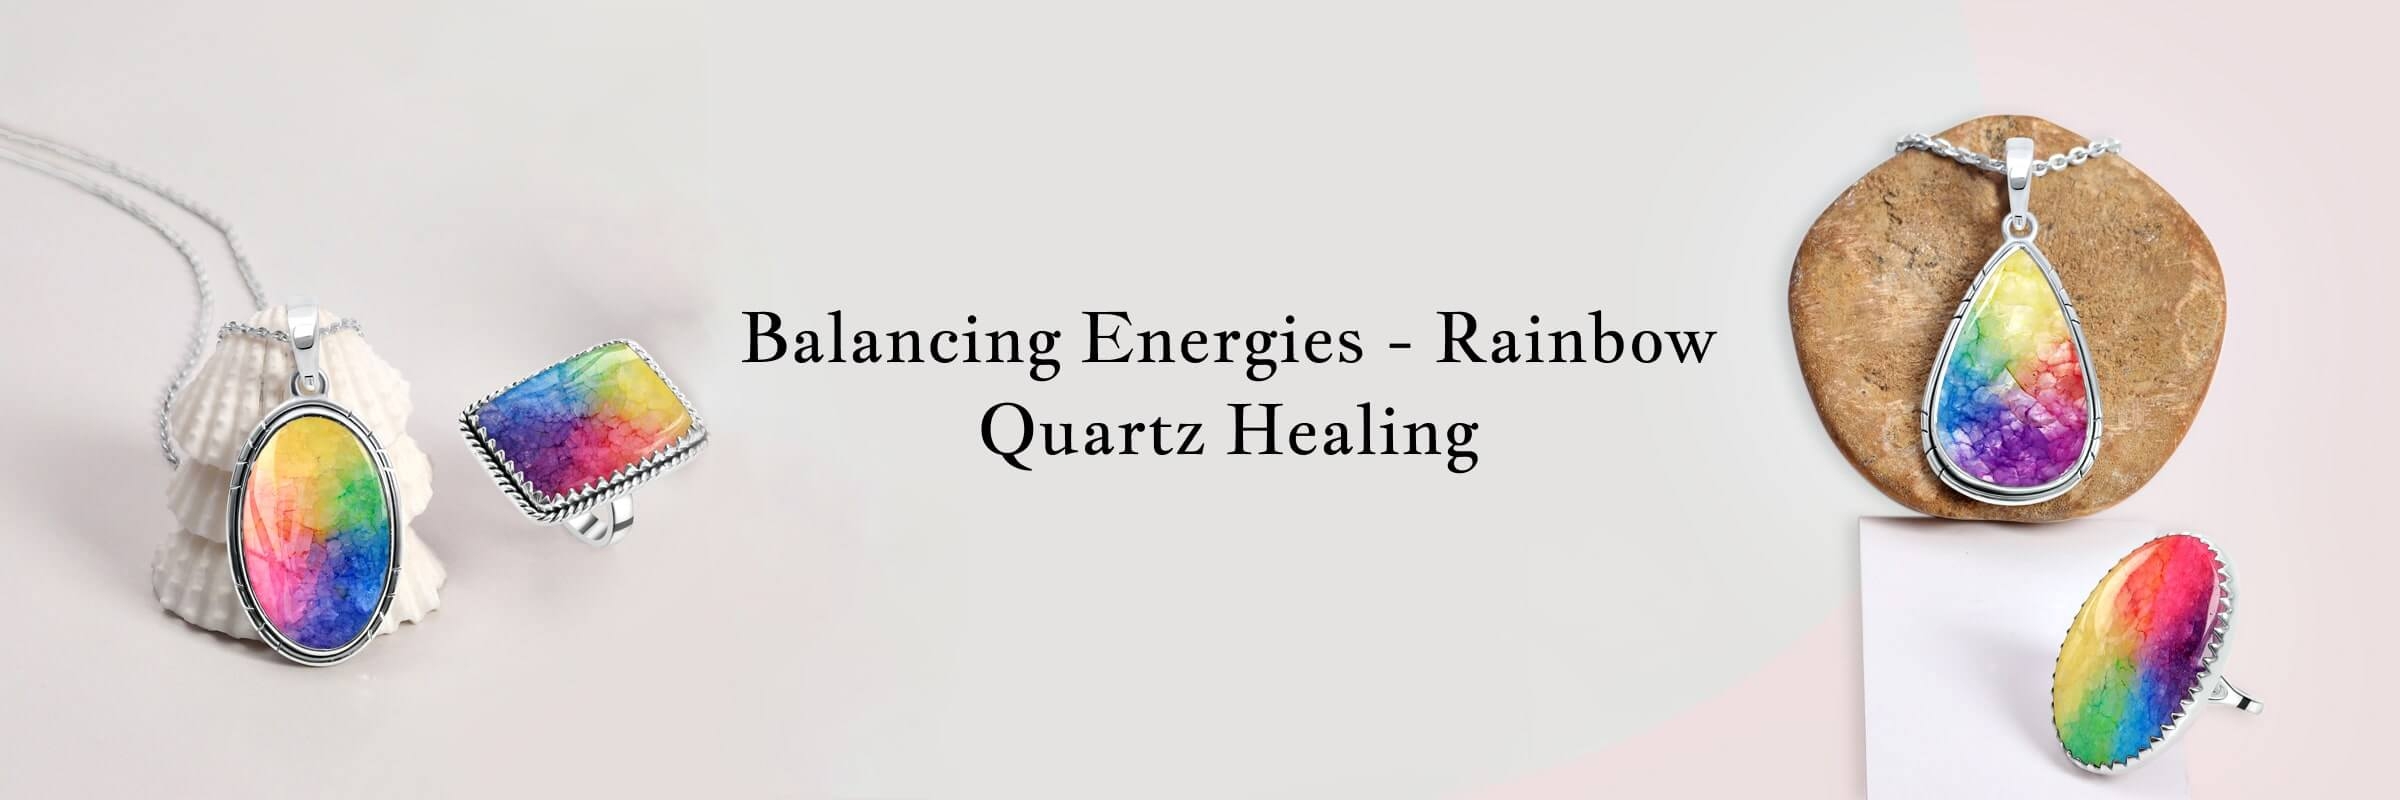 Rainbow Quartz Healing properties